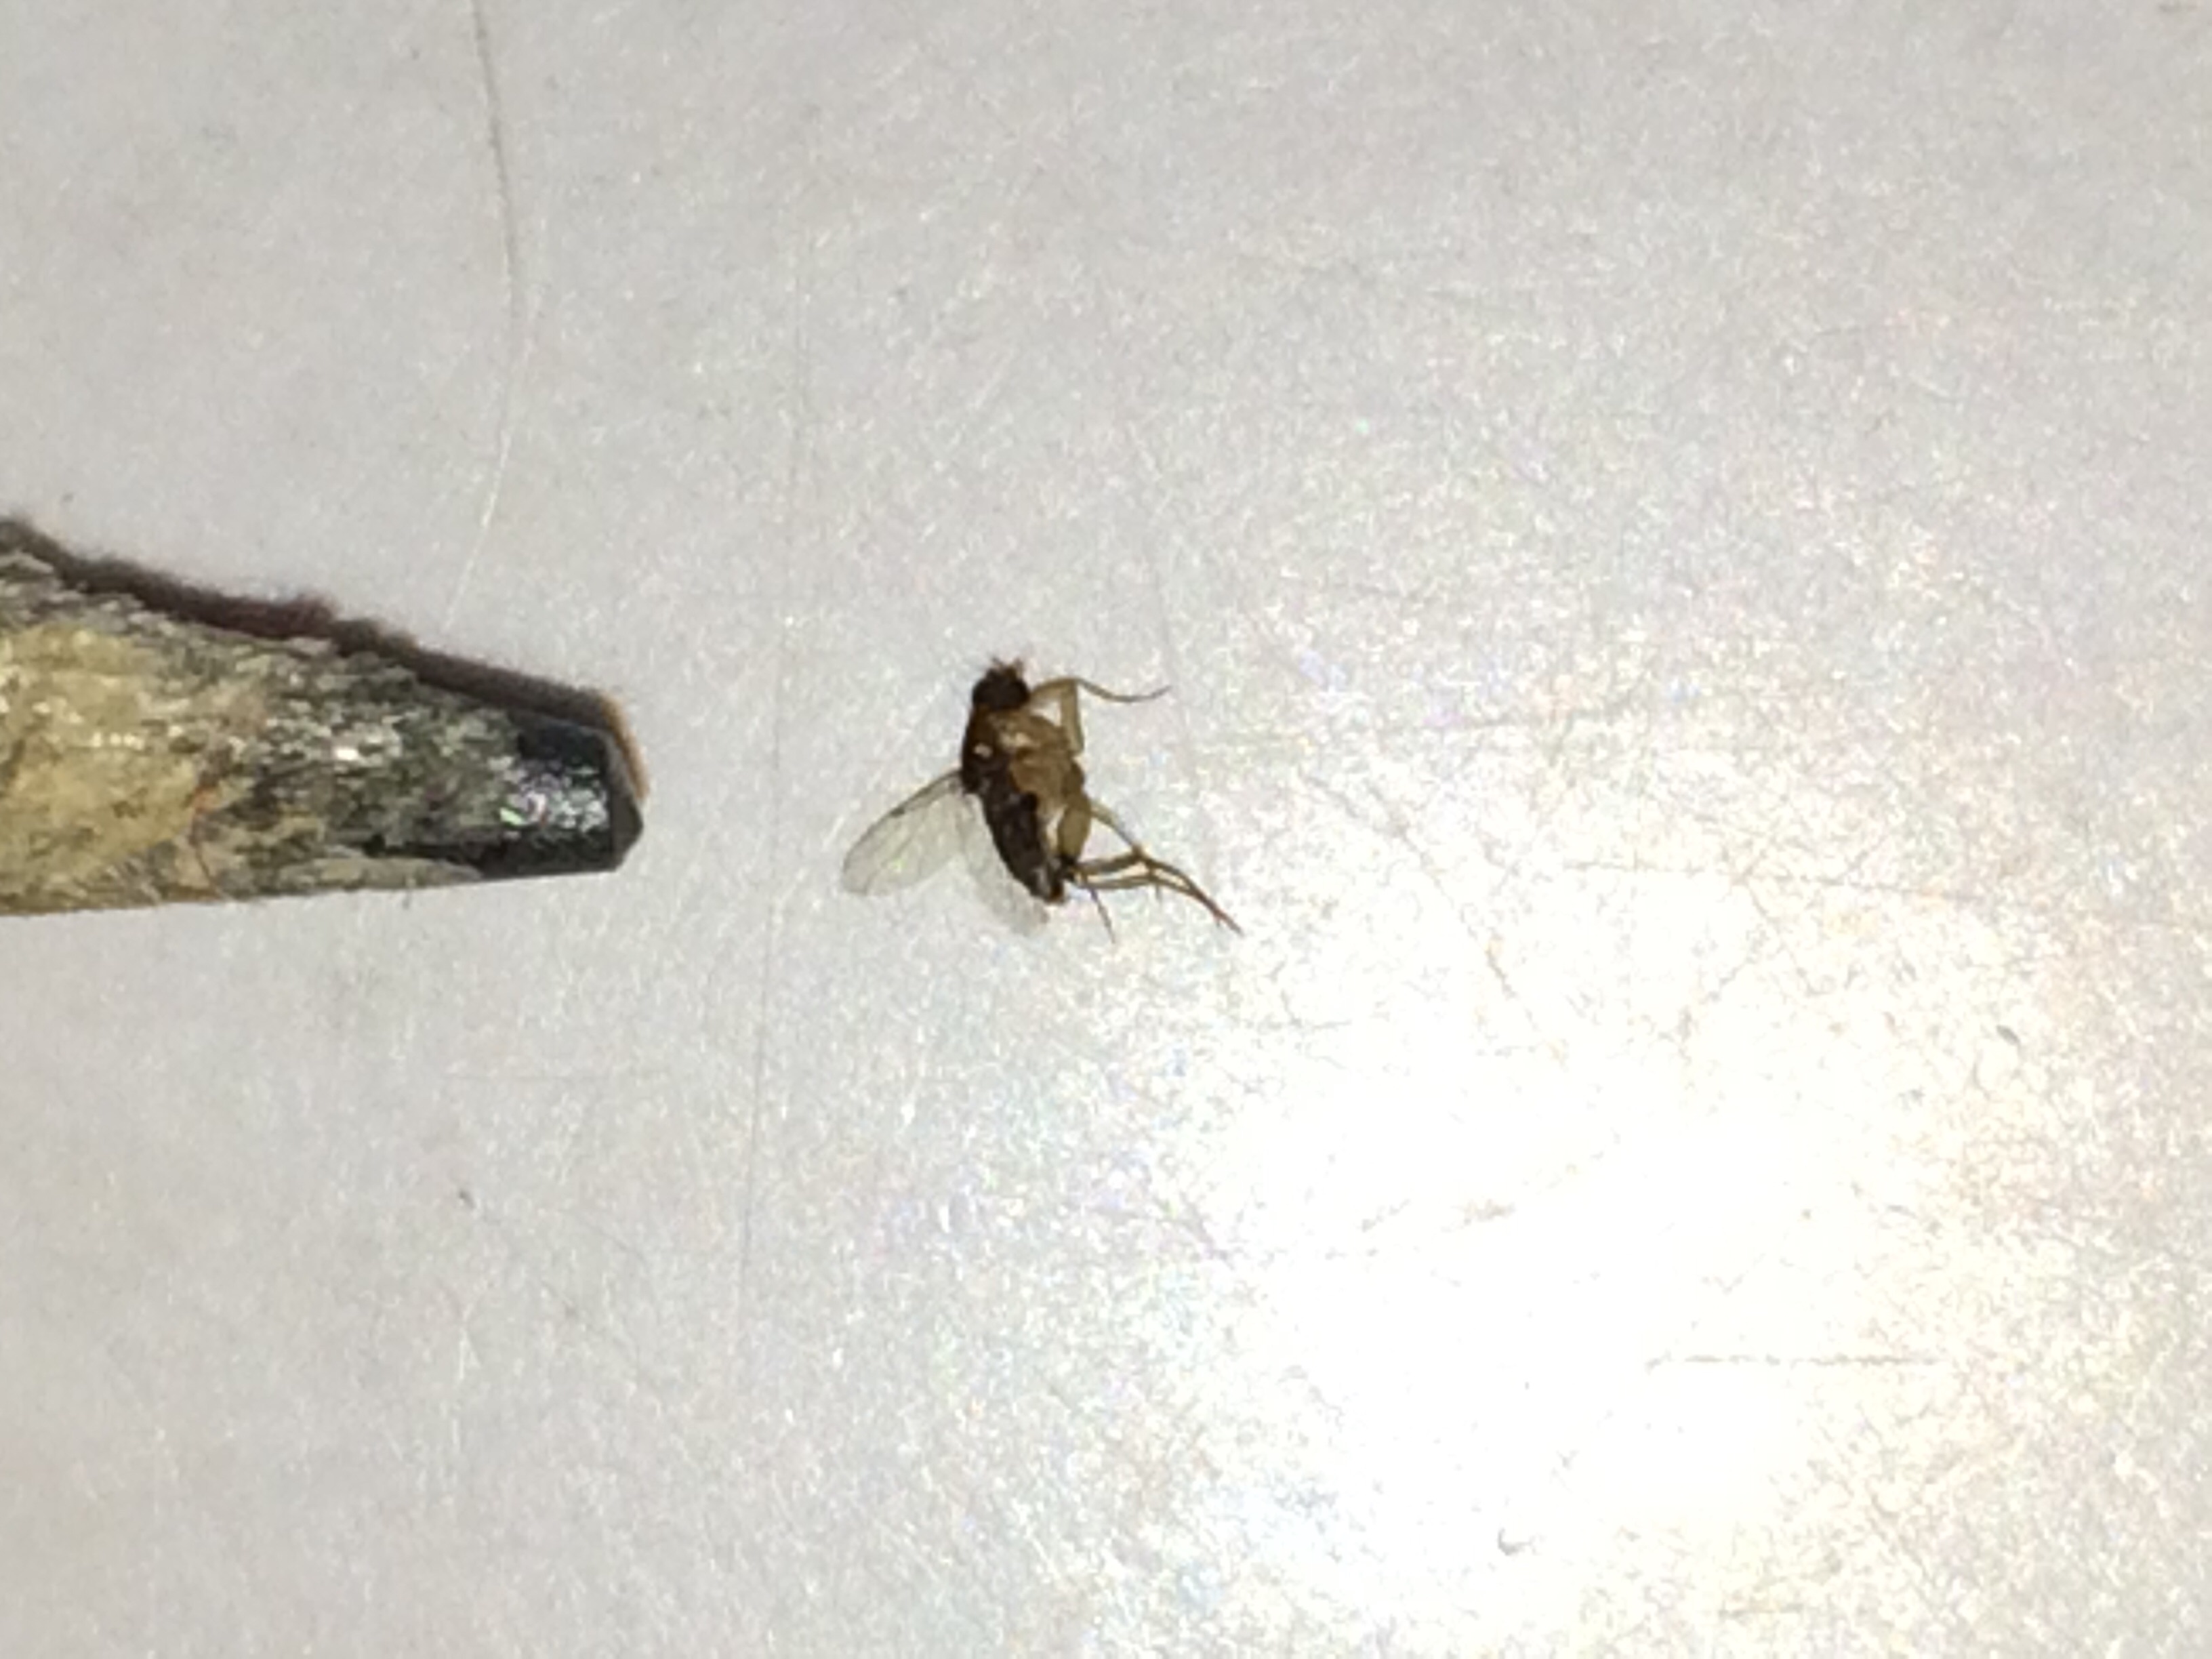 small flies in bathroom sink